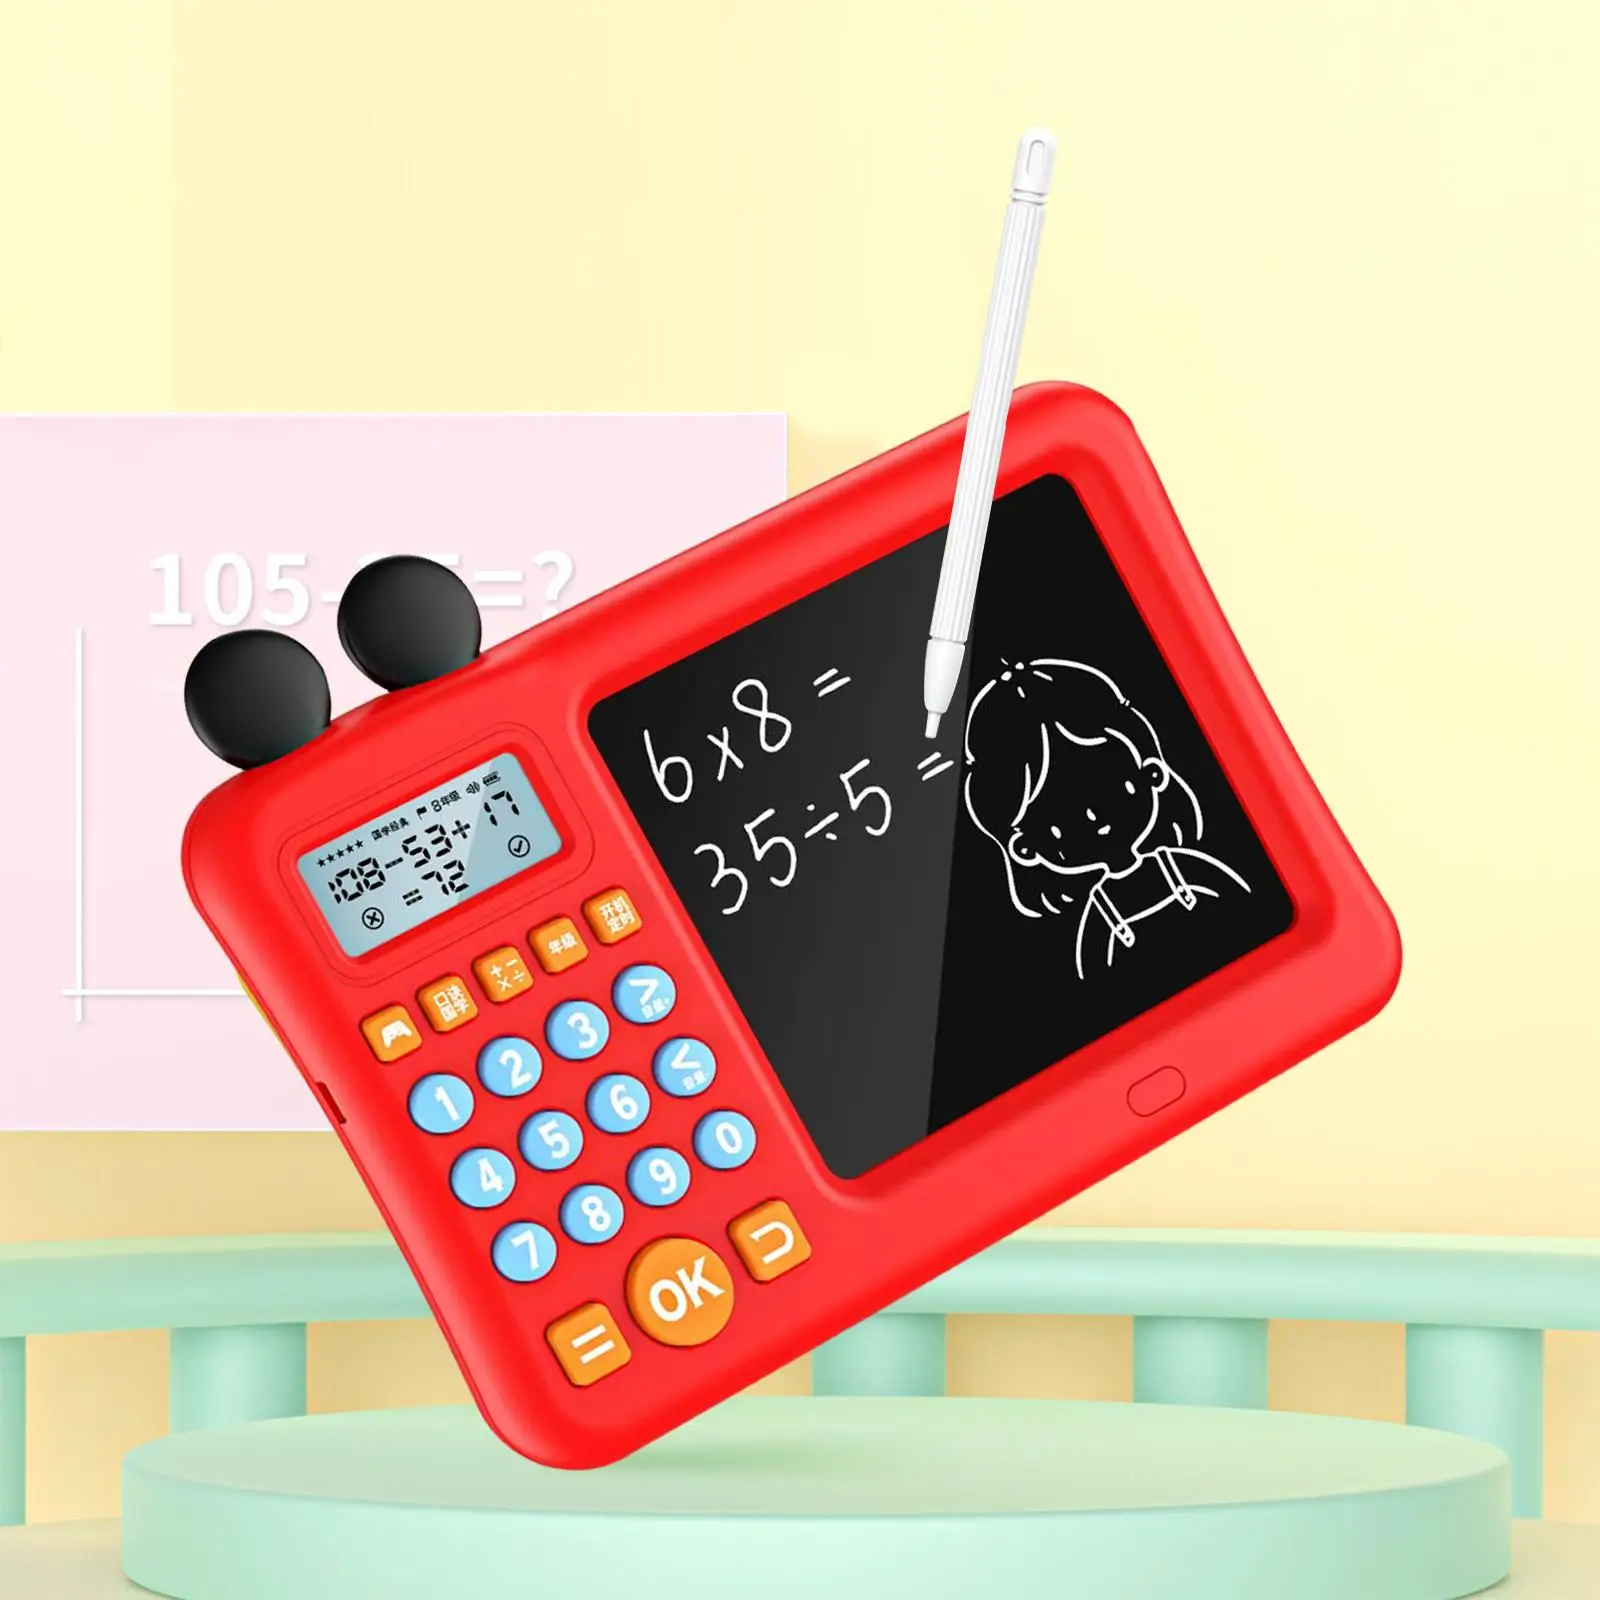 Mathematics Teaching Calculator Educational Toy for Children